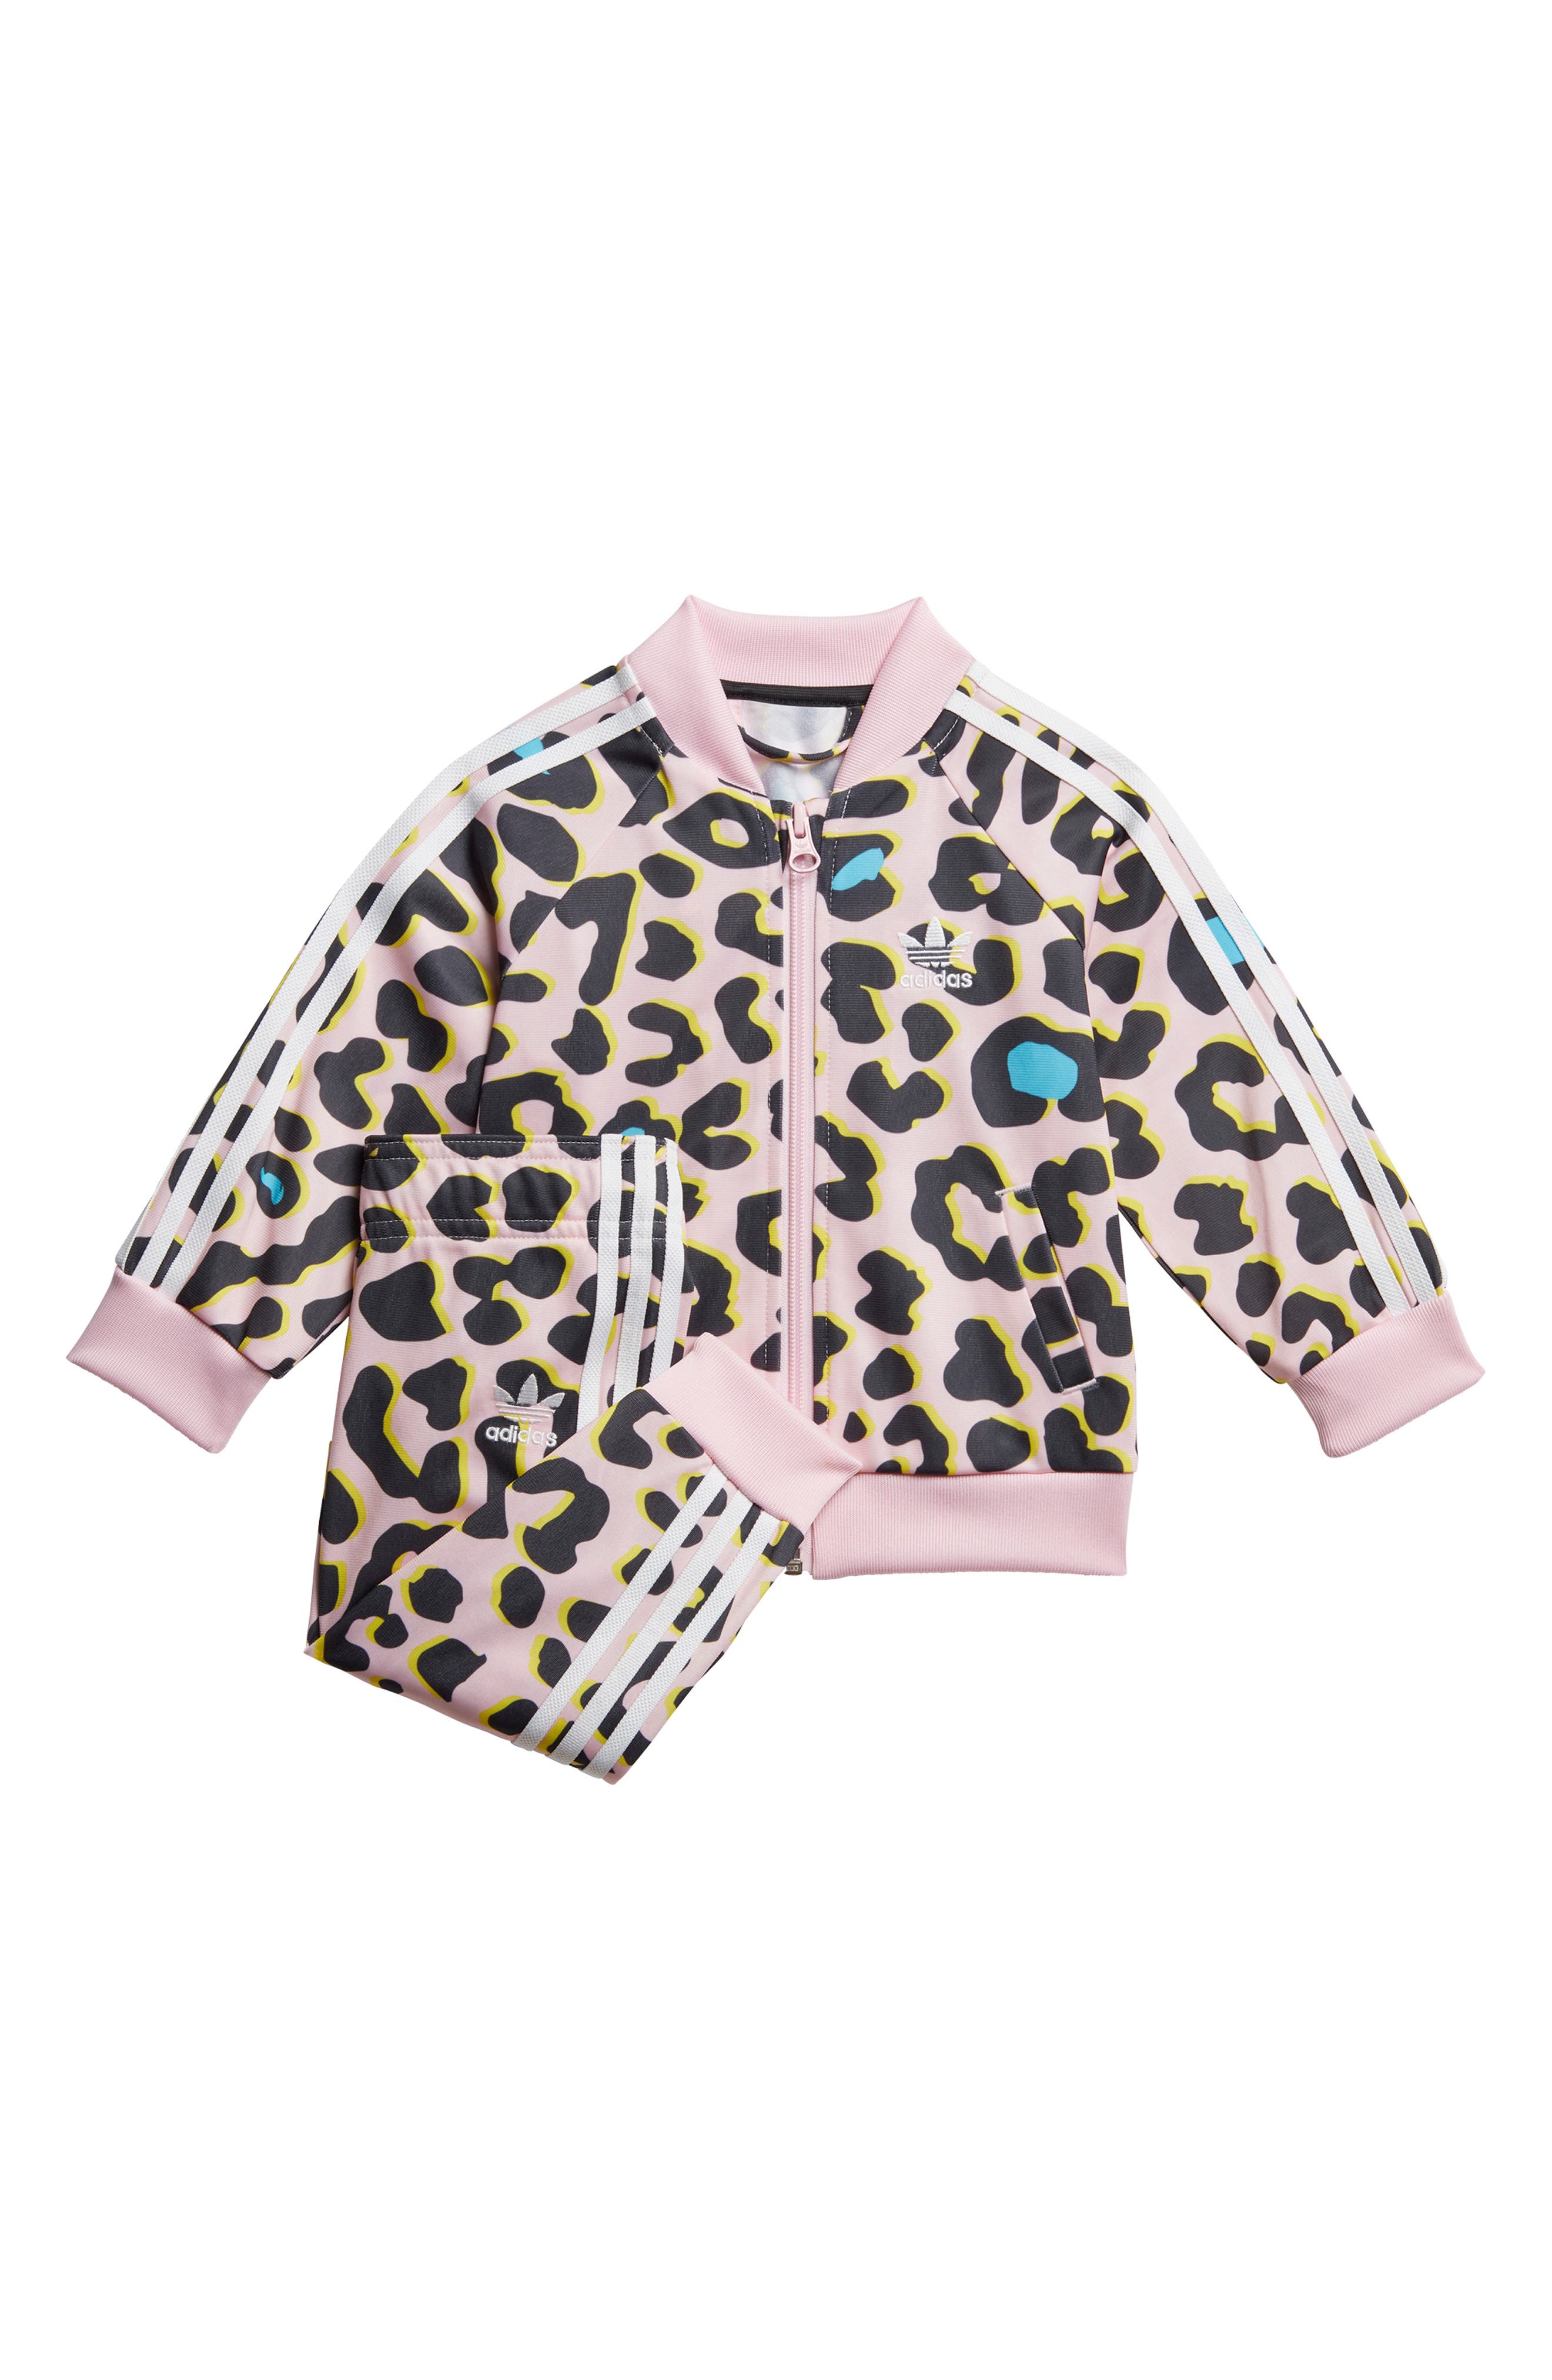 pink leopard adidas